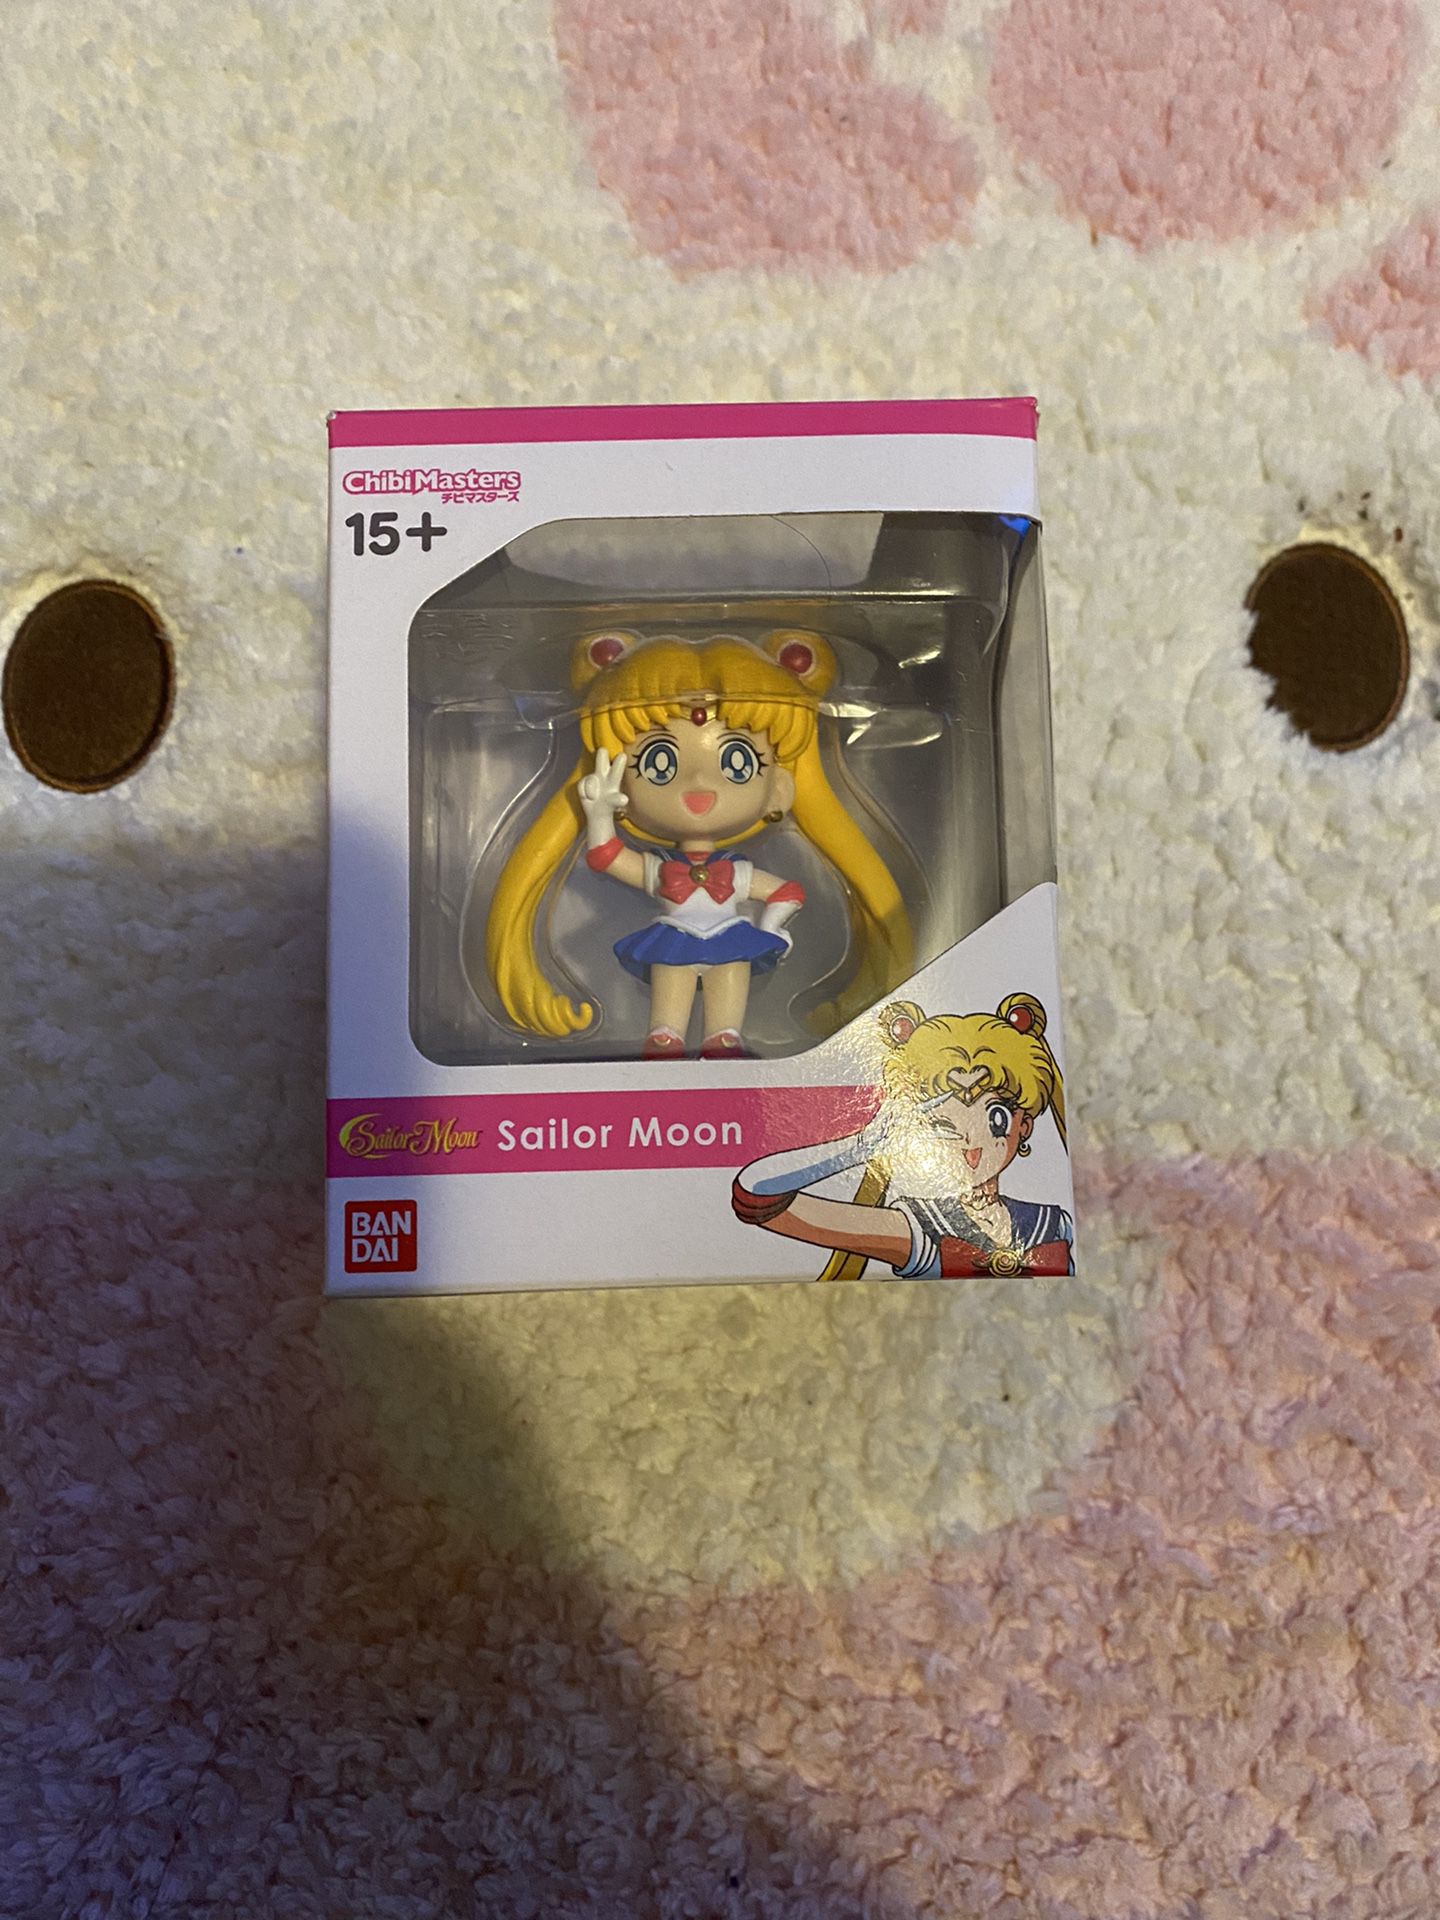 Sailor Moon Chibi Master 